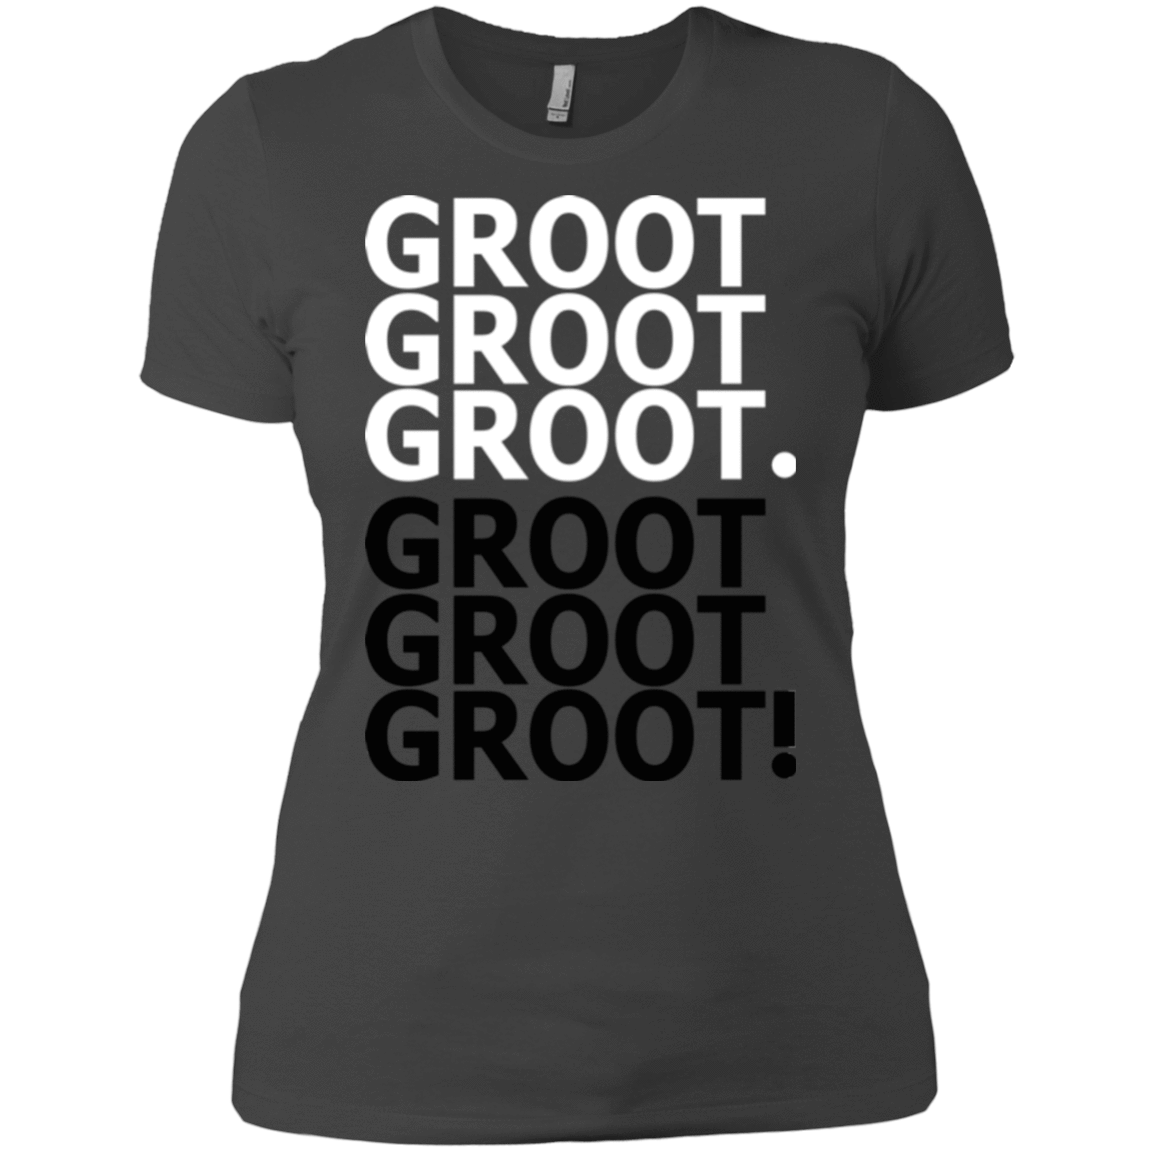 T-Shirts Heavy Metal / X-Small Get over it Groot Women's Premium T-Shirt